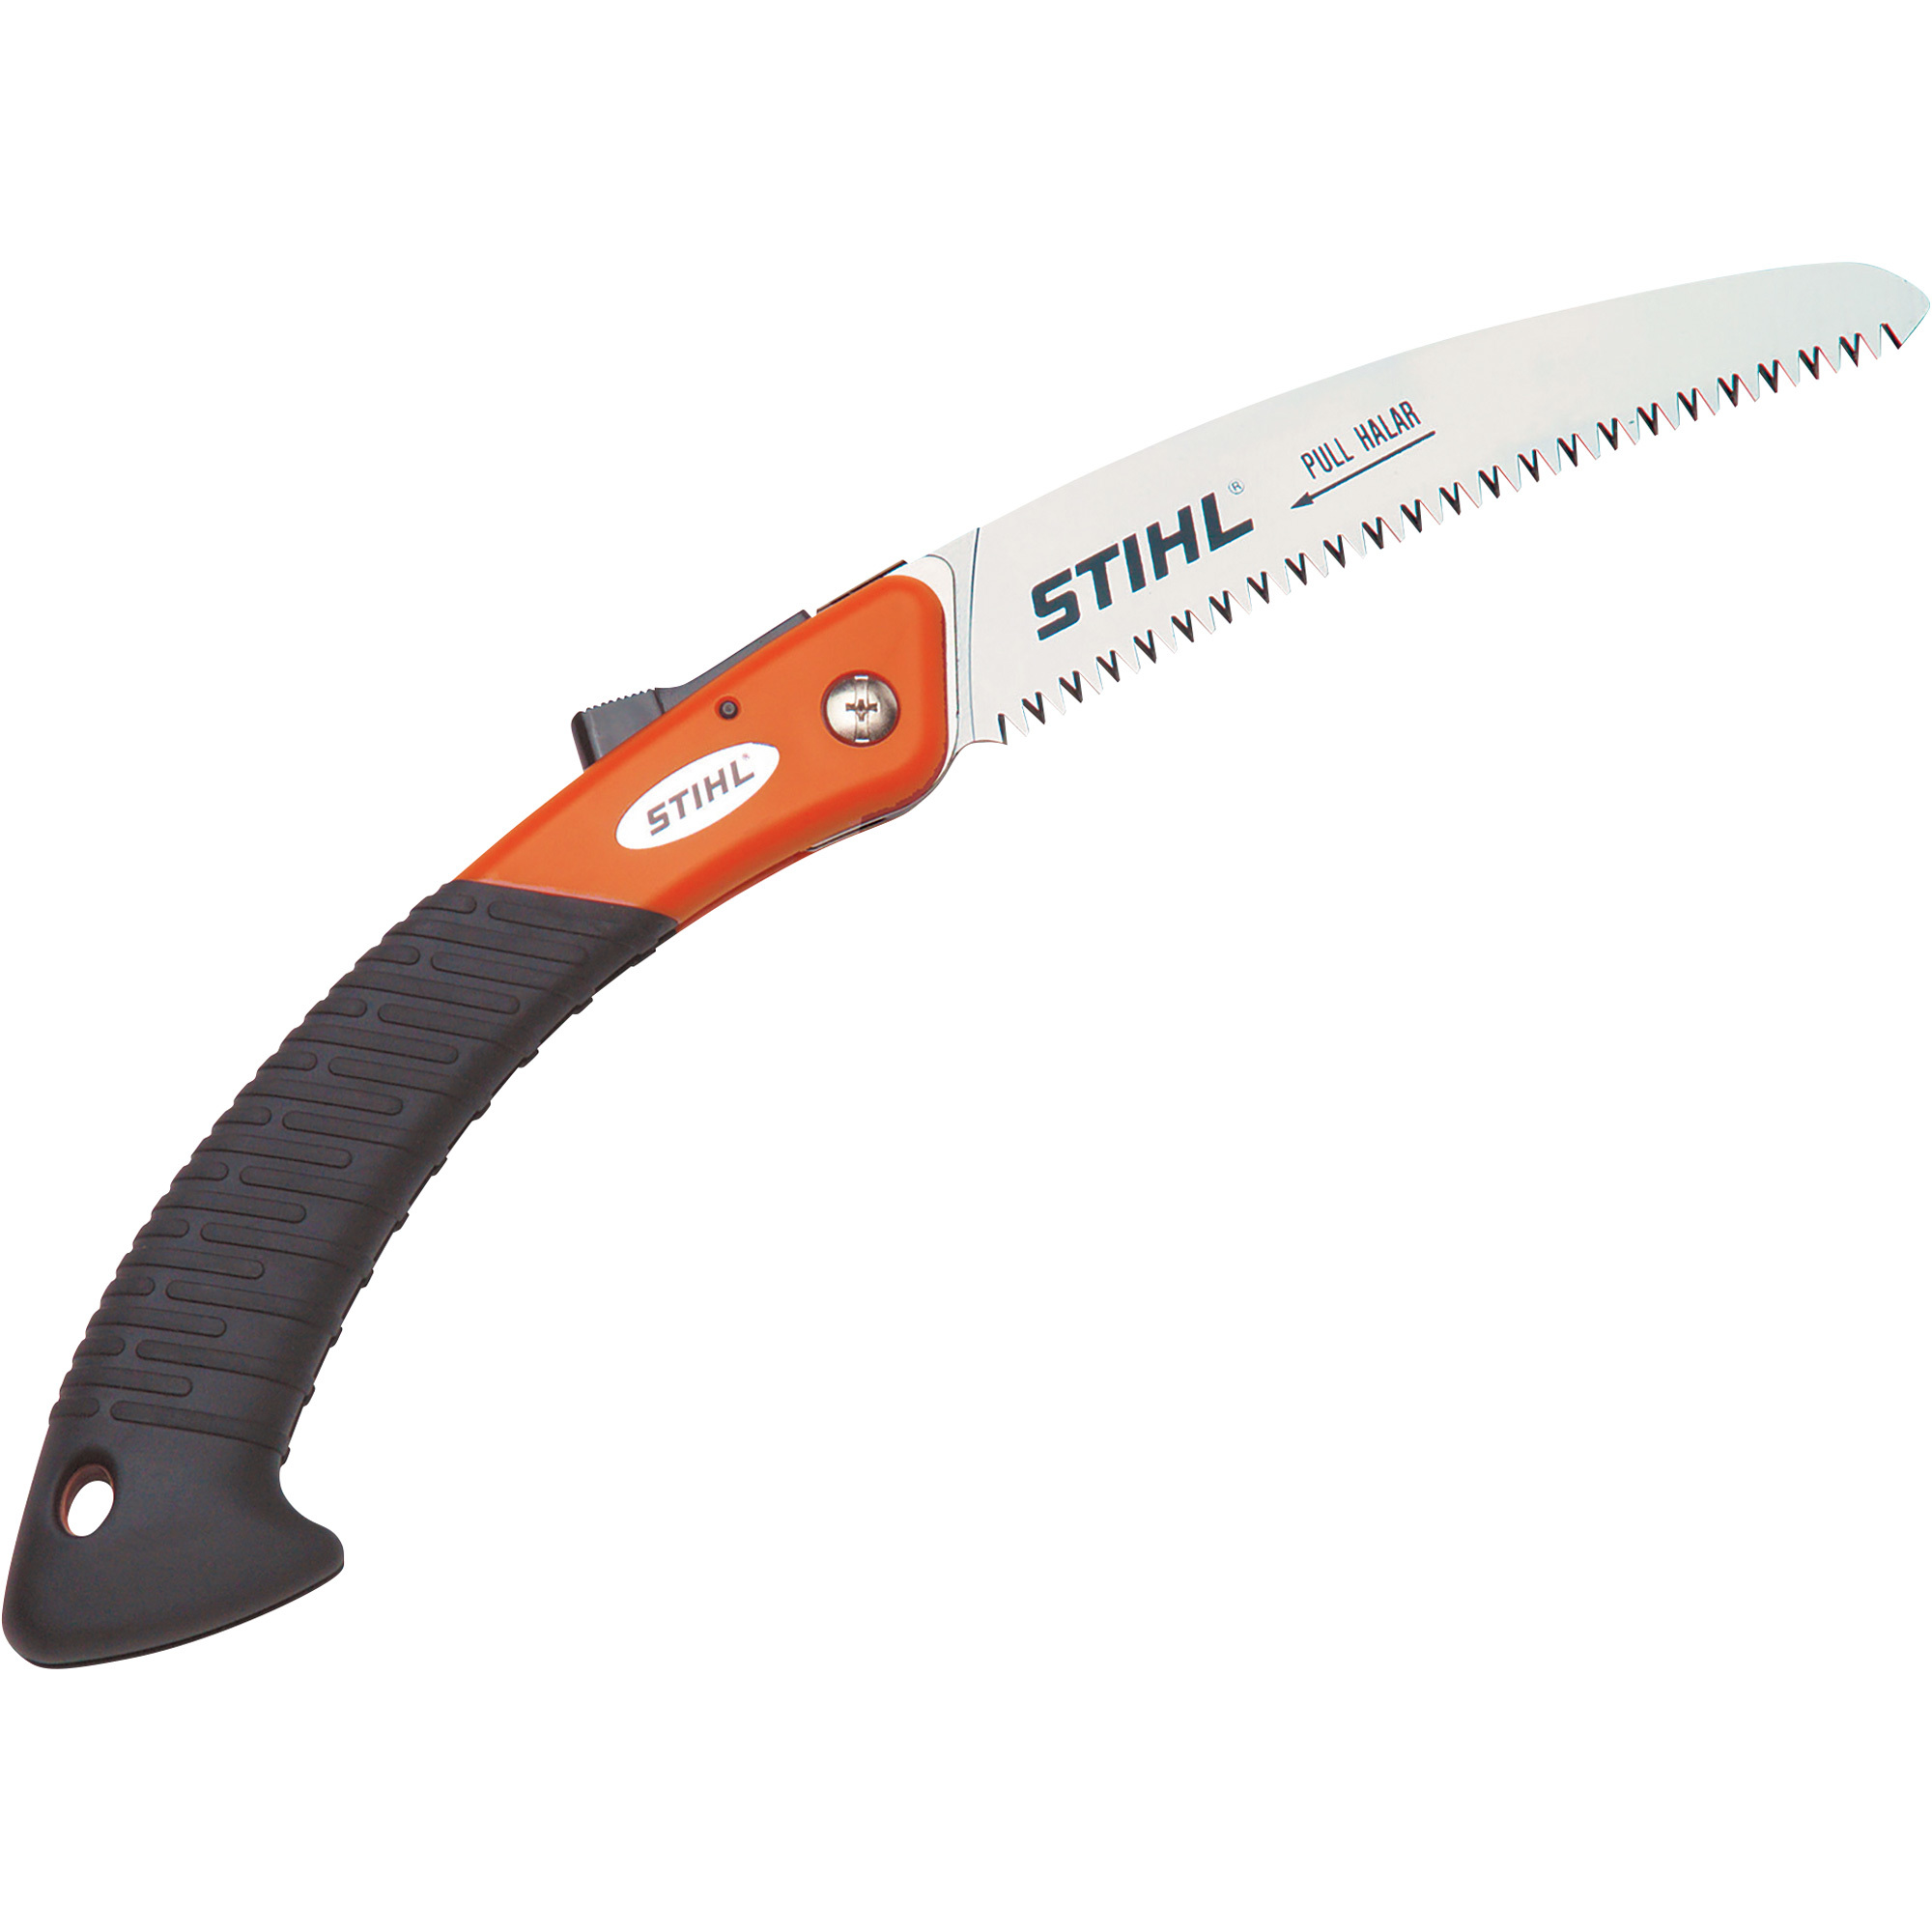 Stihl Folding Pruning Saw â 7Inch Blade, Model PS 30